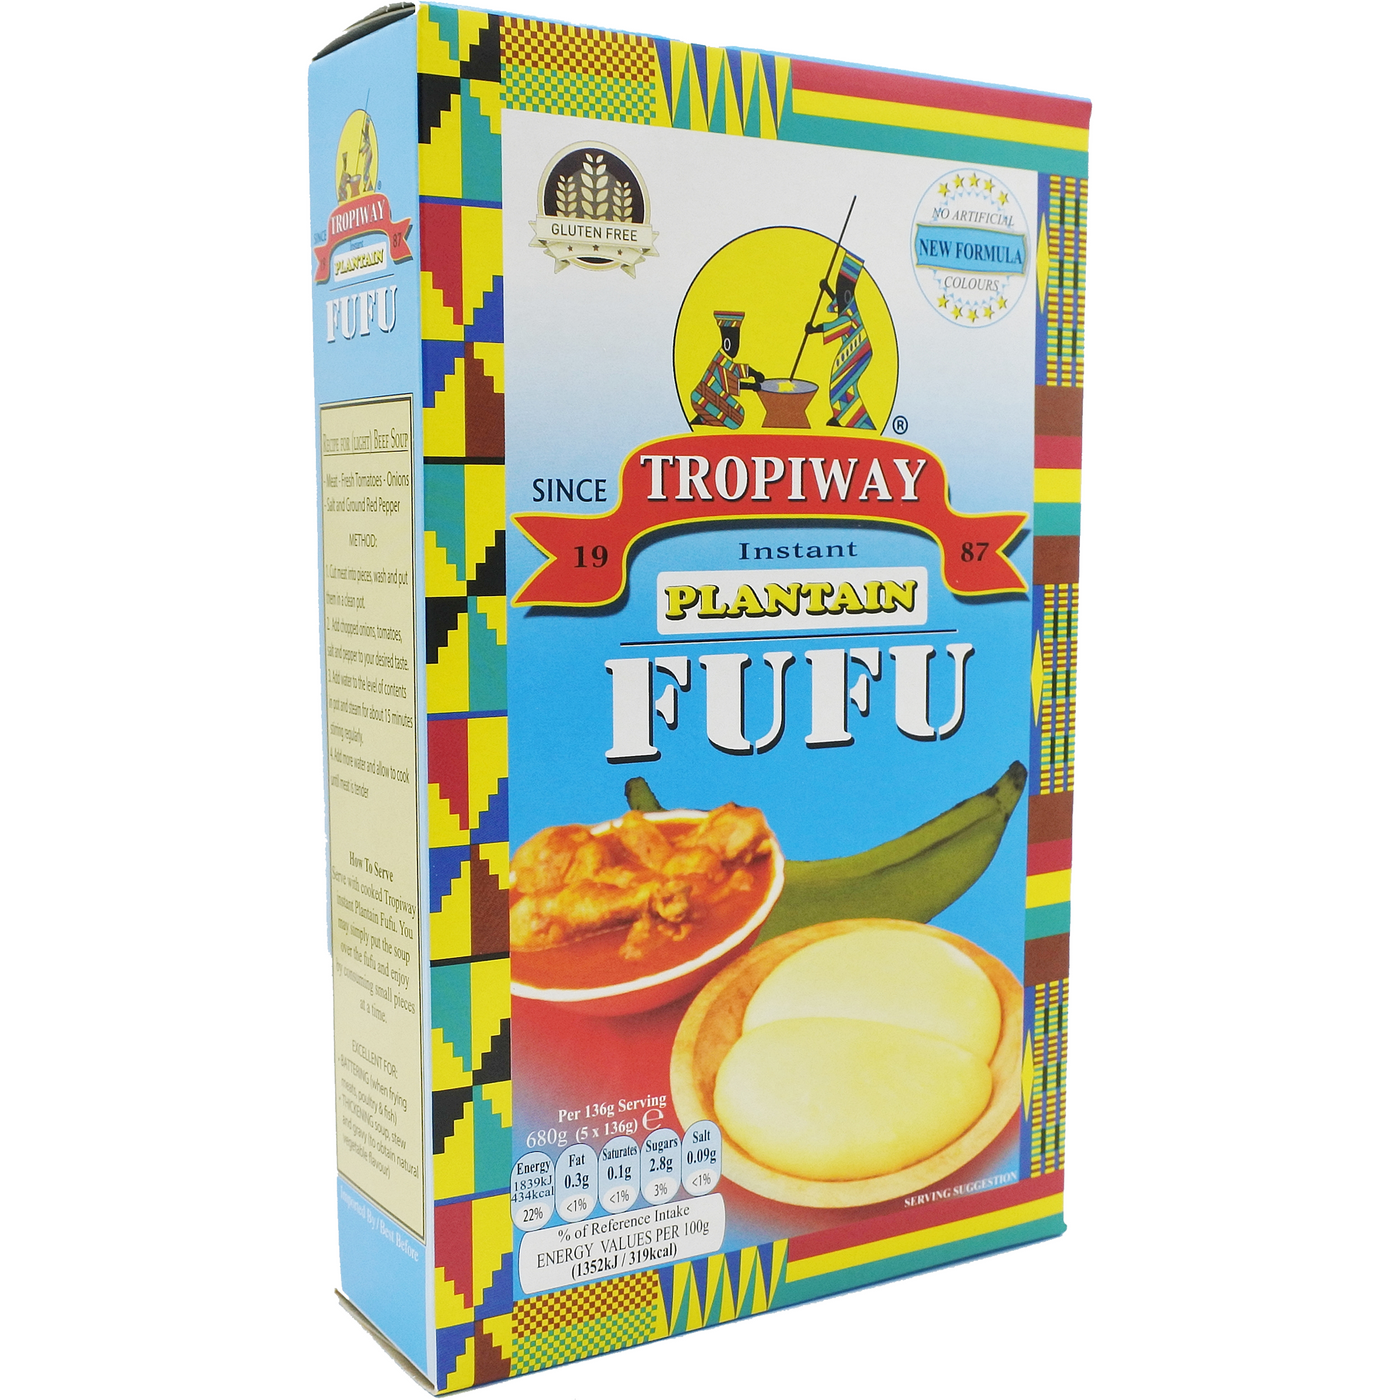 jumbo midlands uk birmingham african food tropiway fufu flakes TF001 27d71279 3a19 4e86 9030